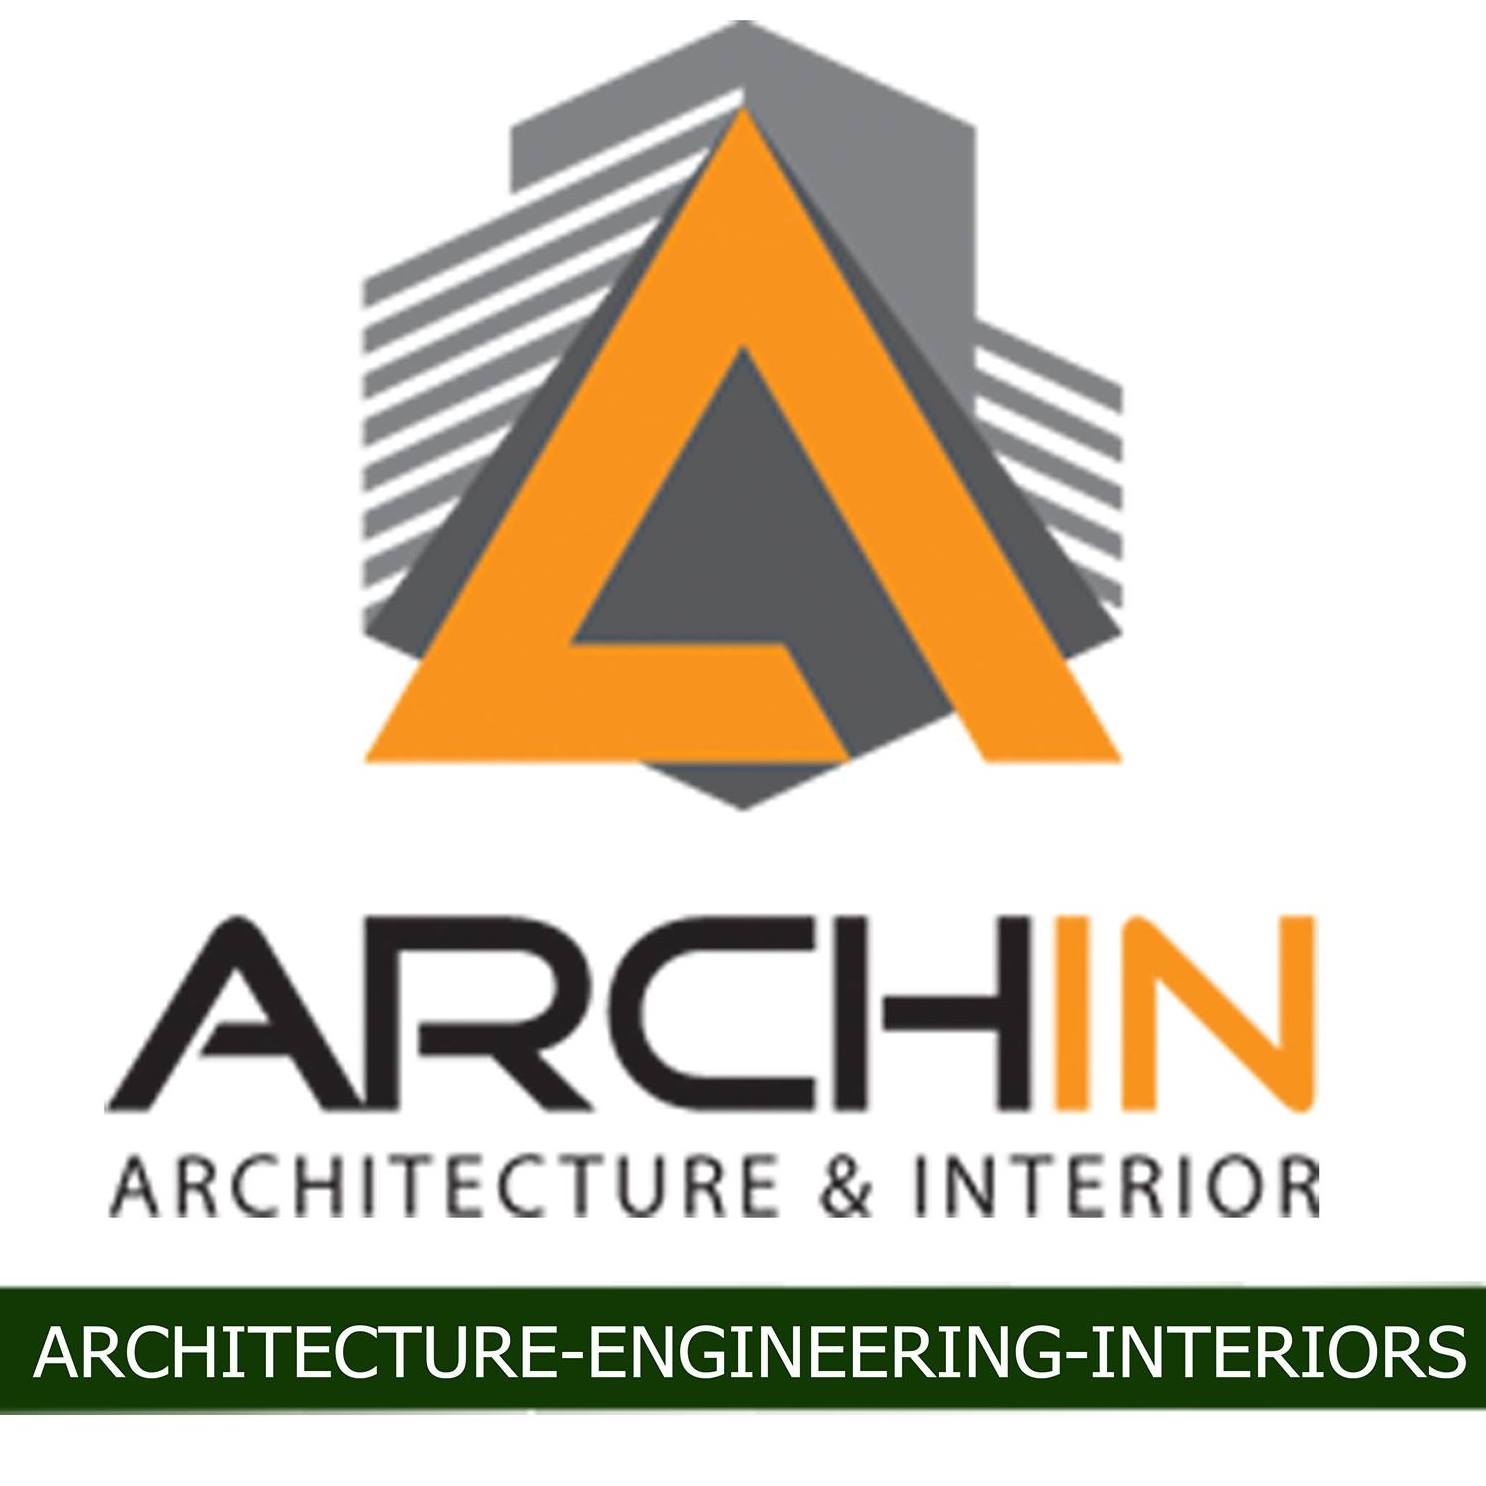 ARCHIN Architecture & Interior Studio|Accounting Services|Professional Services